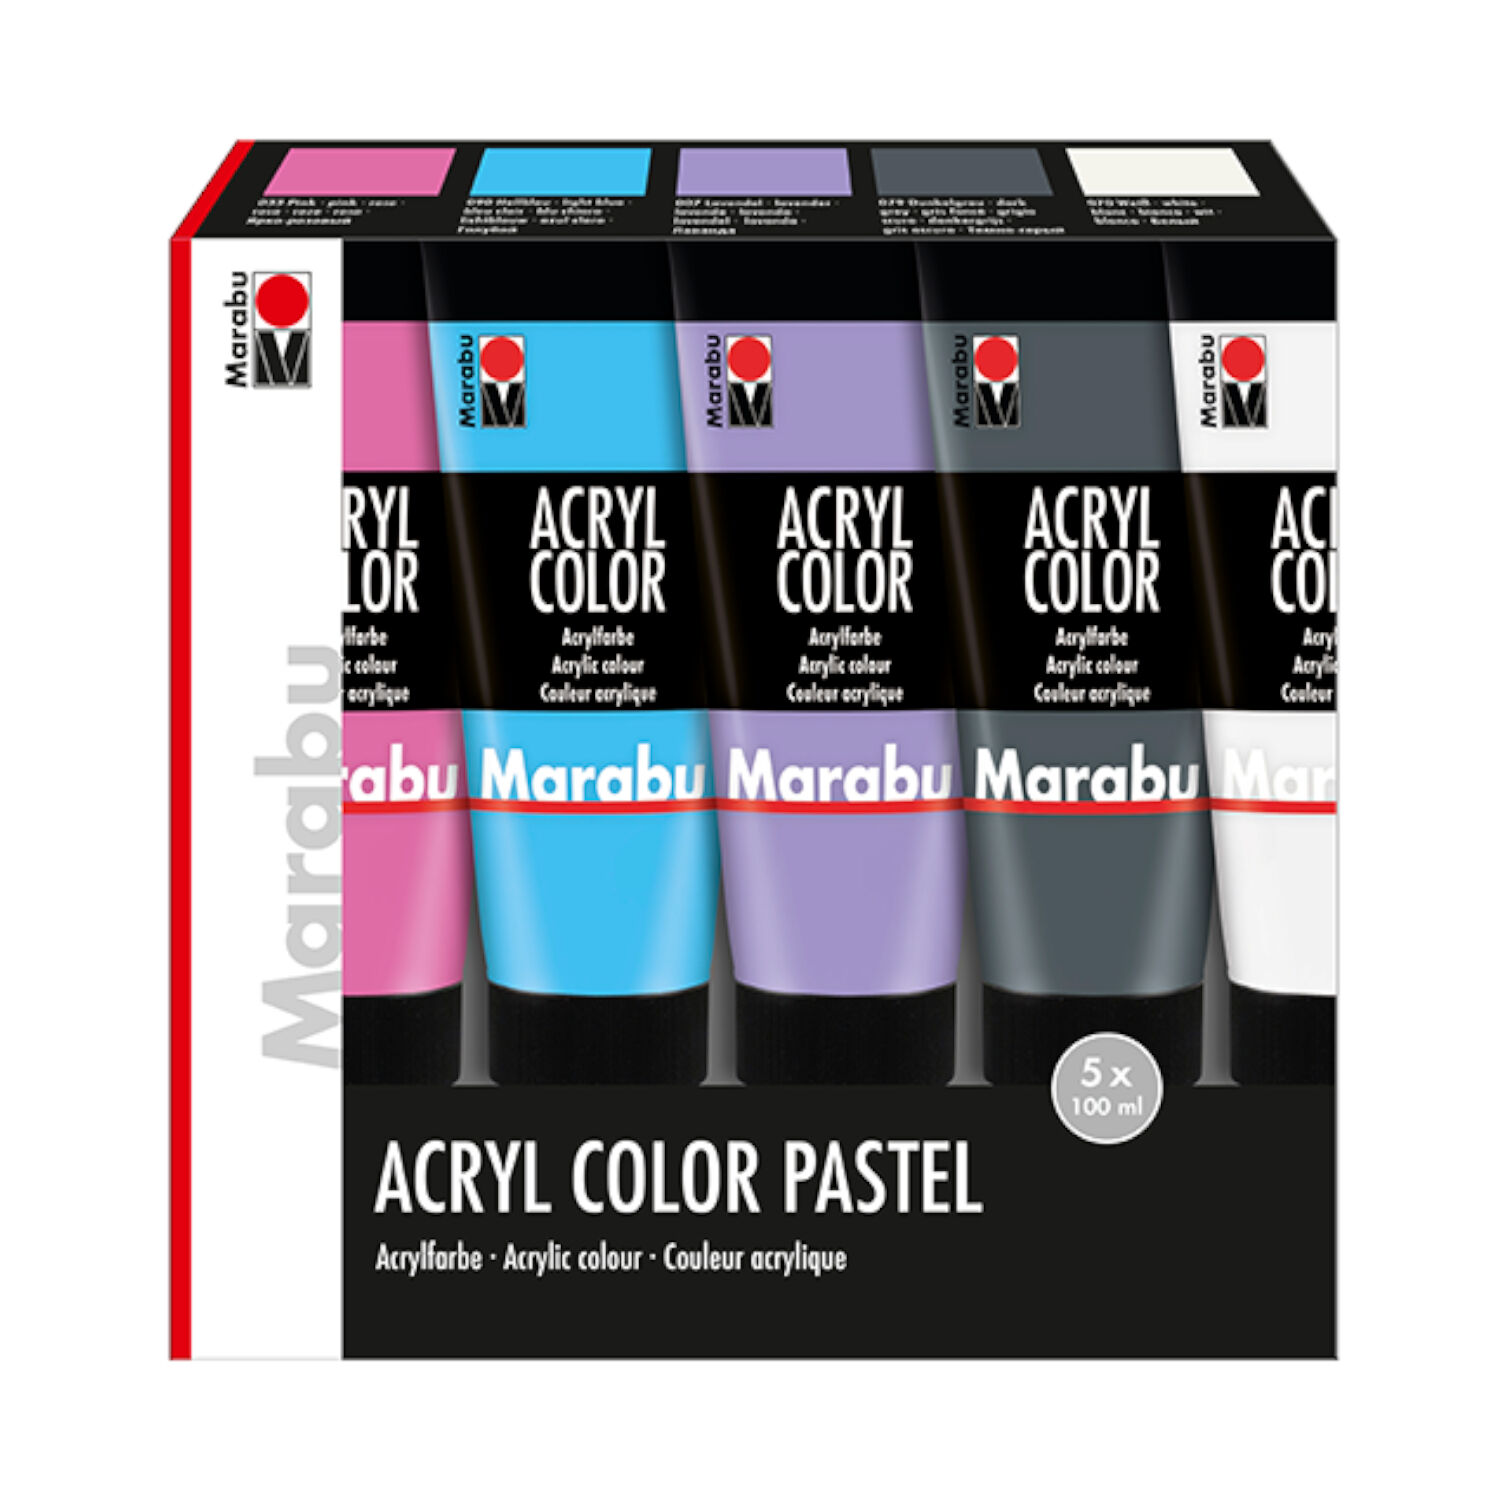 NEU Marabu Acryl Color Set PASTEL, 5 x 100 ml